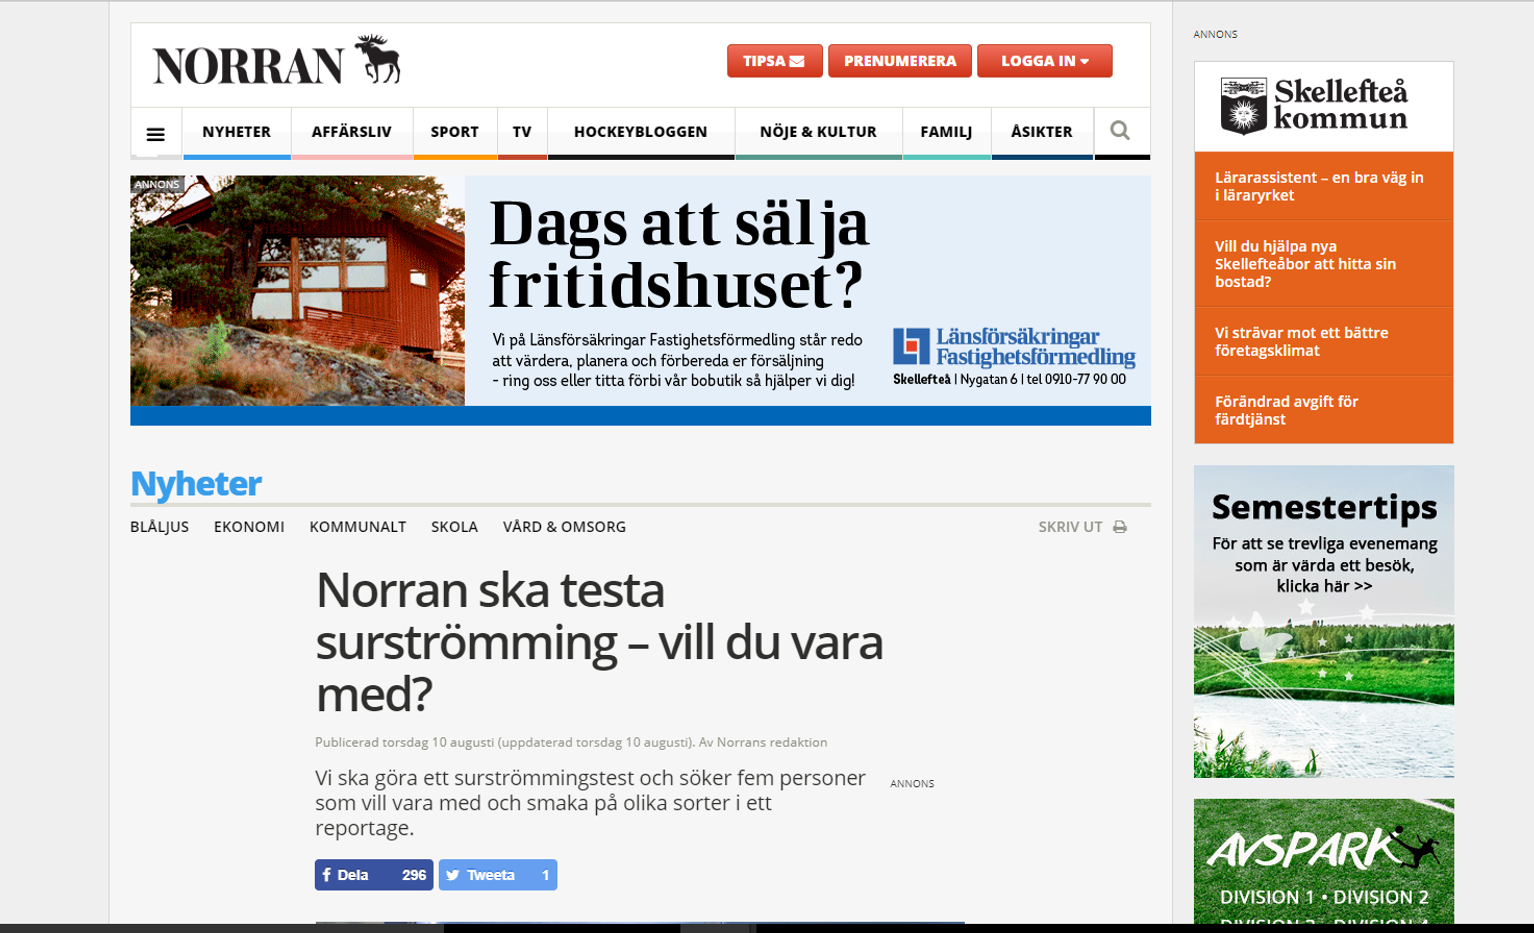 Norran新聞